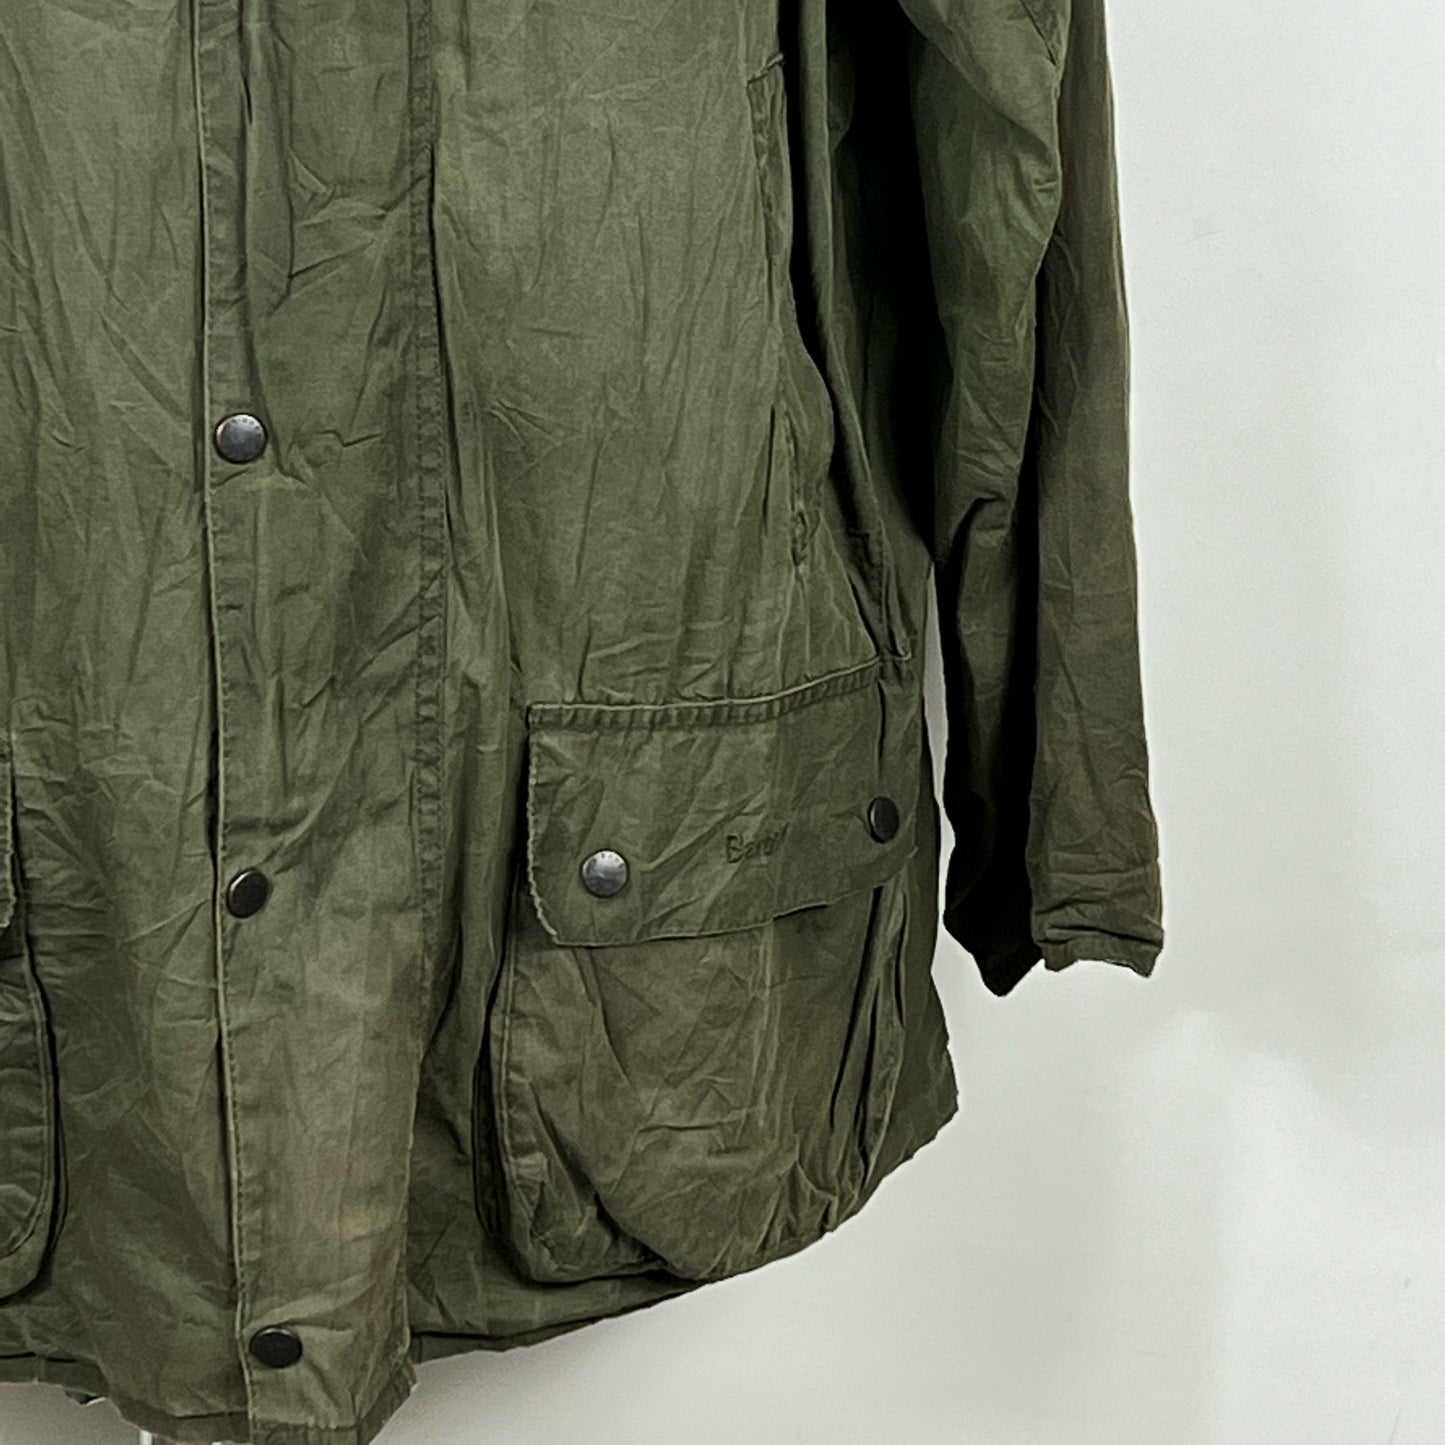 Giacca Uomo Barbour Cerata Verde Uomo XXLarge Beaumont Green Man Jacket Size 2xL